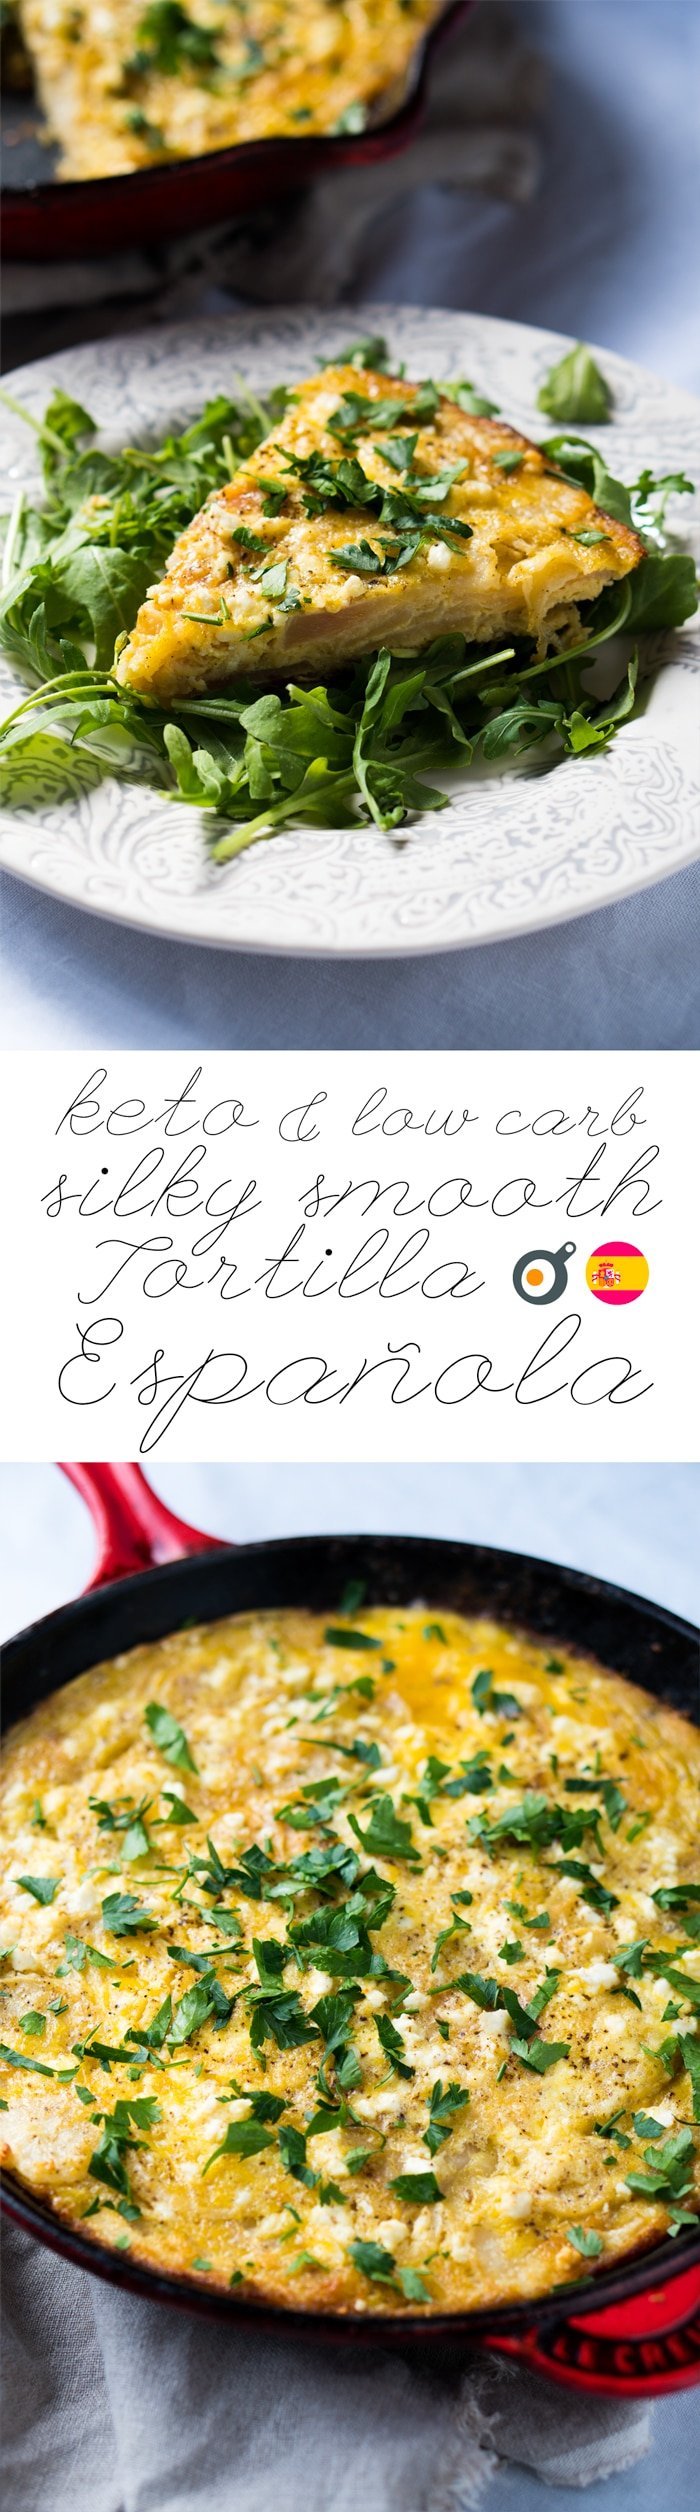 Low Carb & Keto Tortilla Española 🍳🇪🇸 Silky Smooth! #keto #ketobreakfast